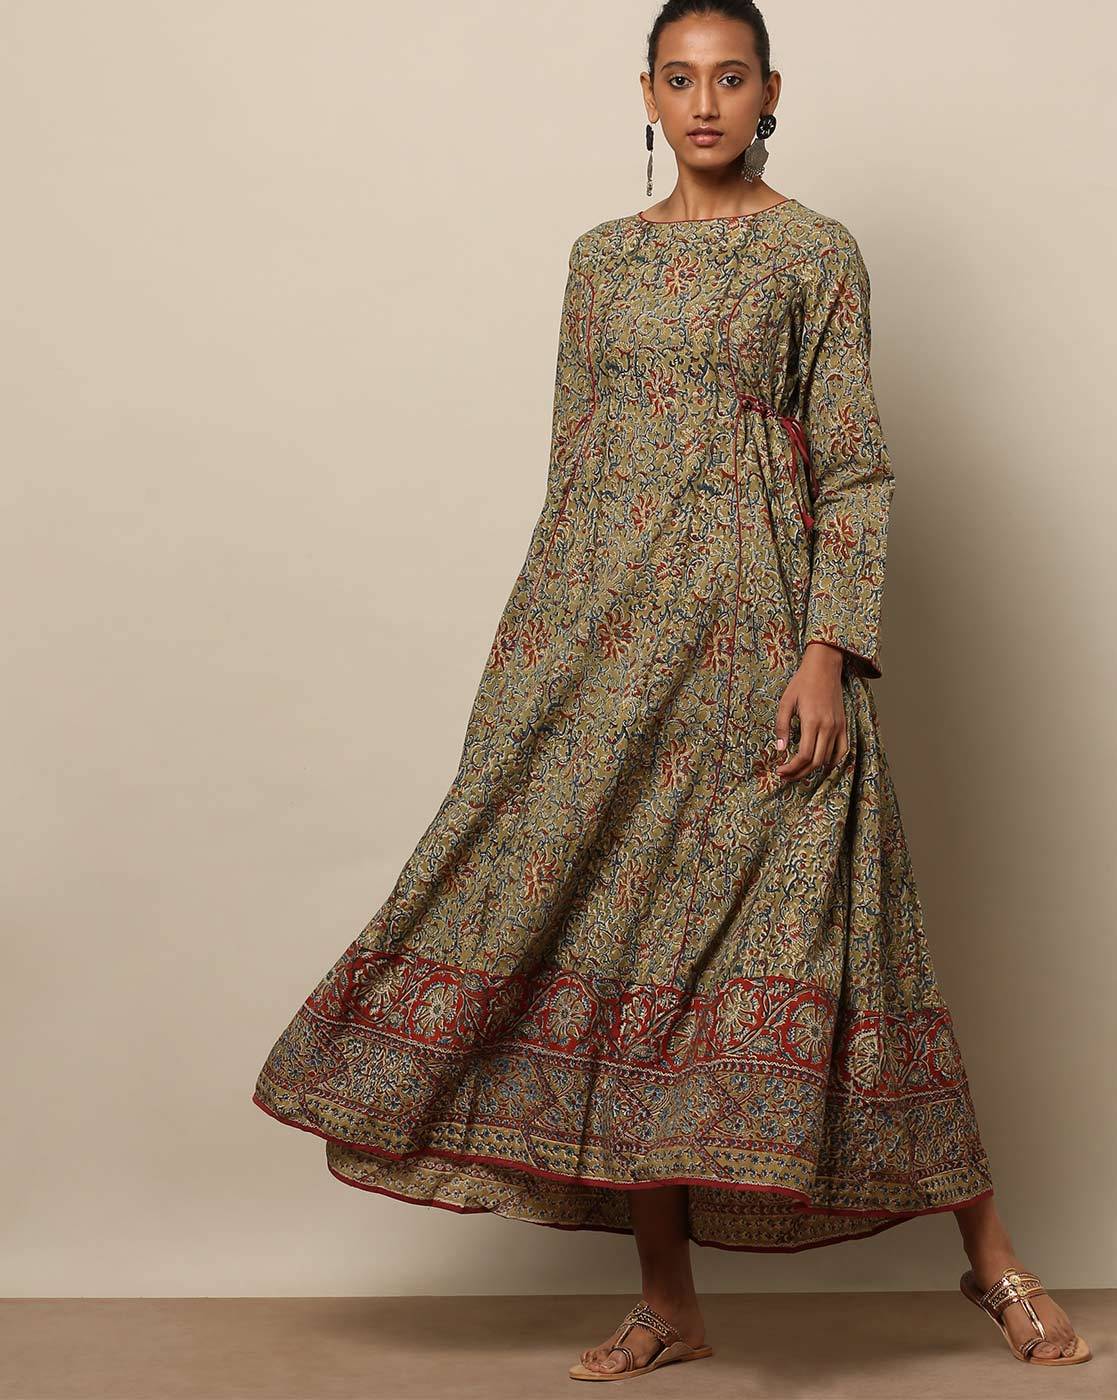 Buy > kalamkari one piece dress > in stock